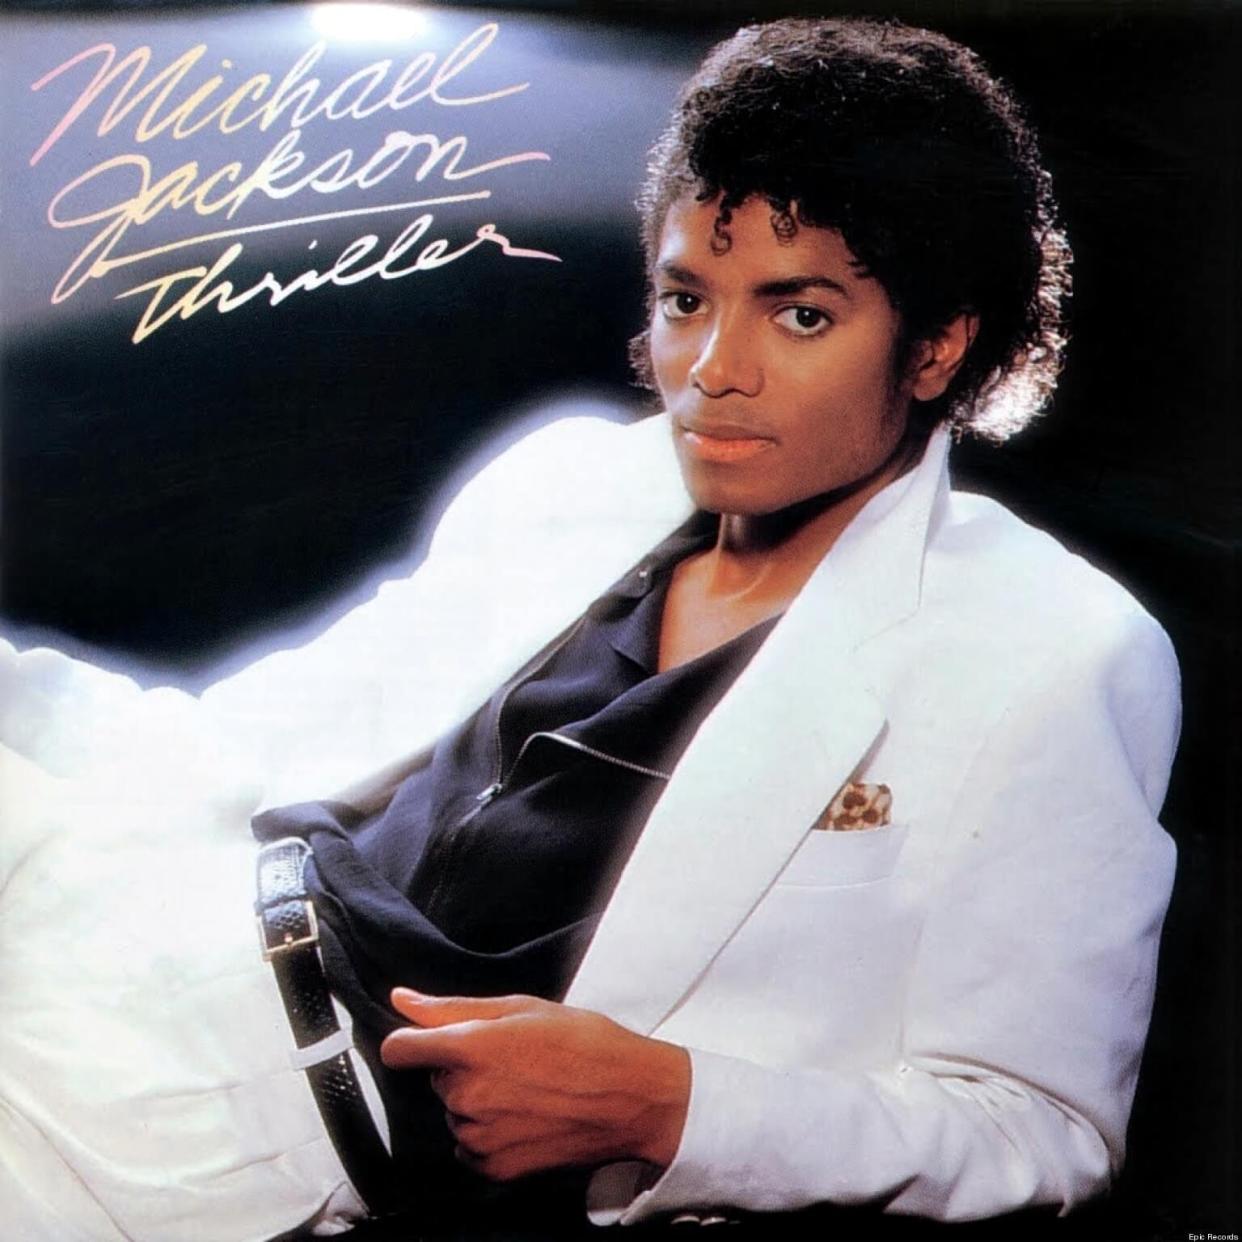 Michael Jackson's "Thriller" is Released in 1984